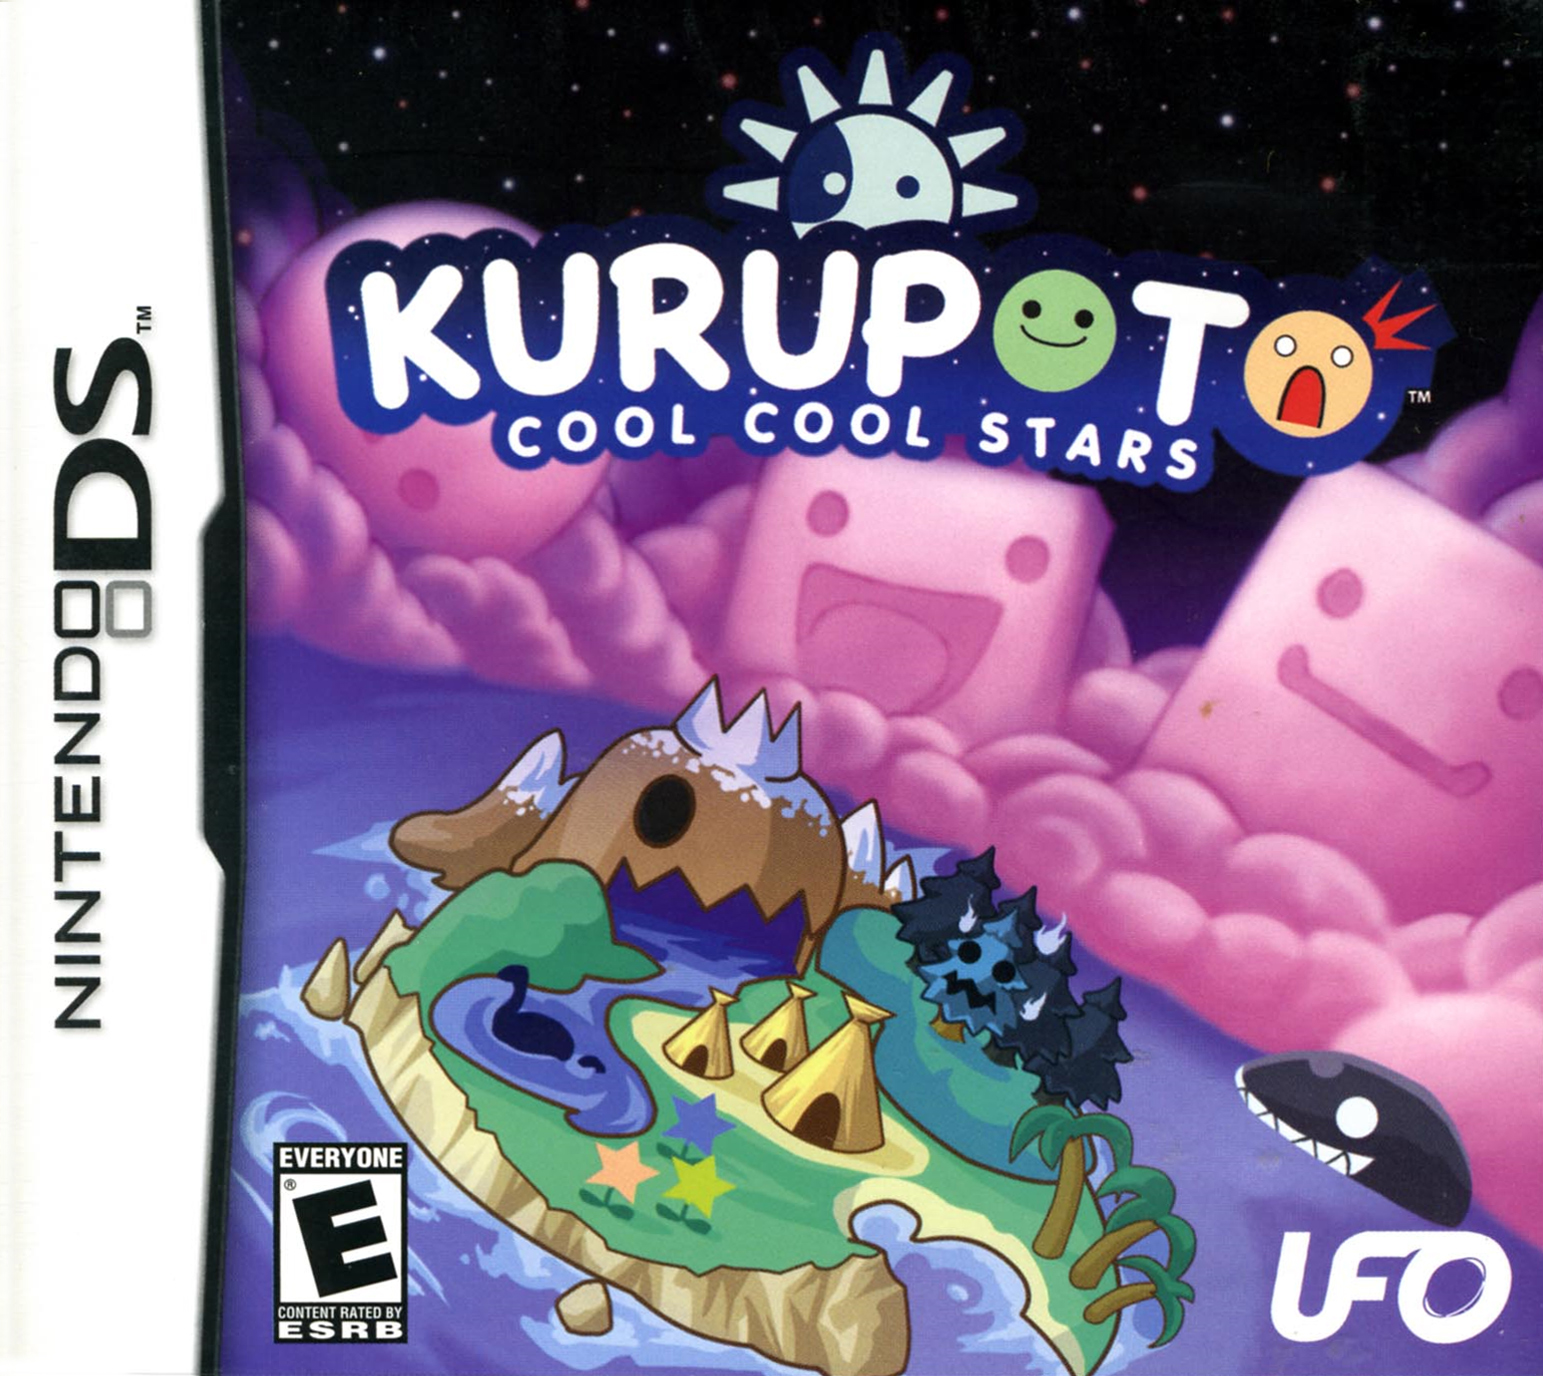 Kurupoto: Cool Cool Stars - Nintendo DS - image 1 of 2